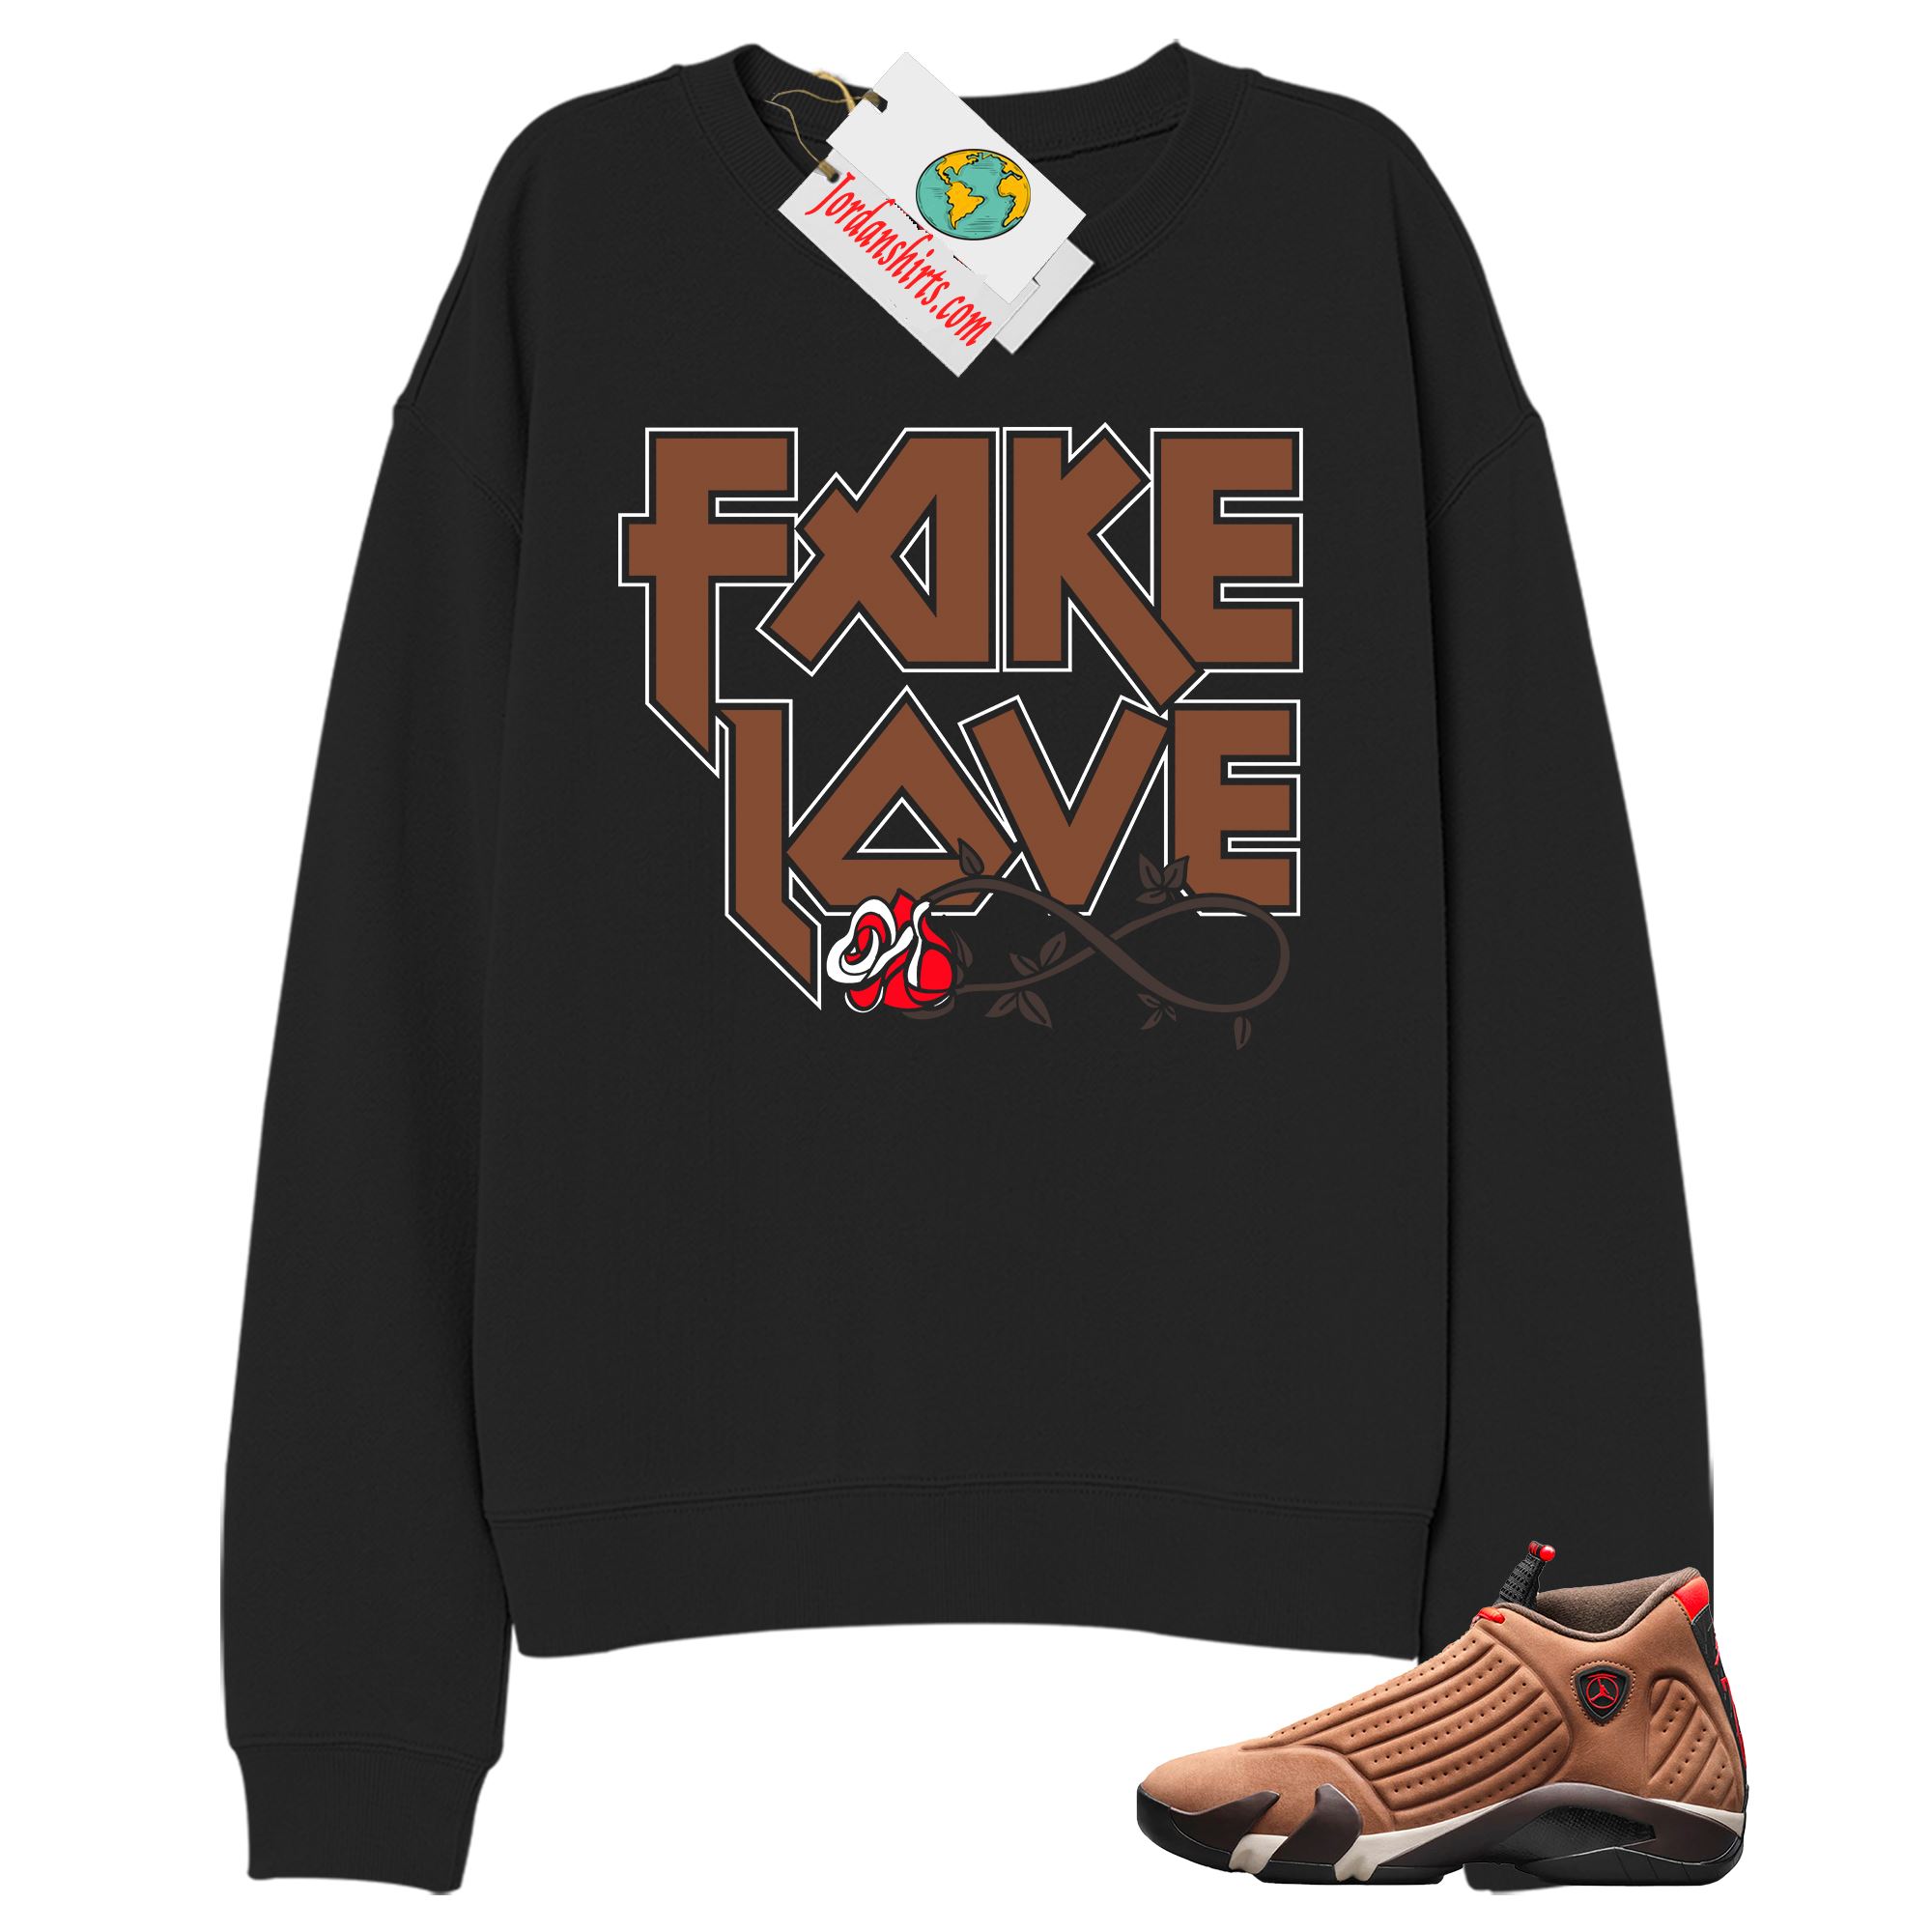 Jordan 14 Sweatshirt, Fake Love Infinity Rose Black Sweatshirt Air Jordan 14 Winterized 14s Size Up To 5xl